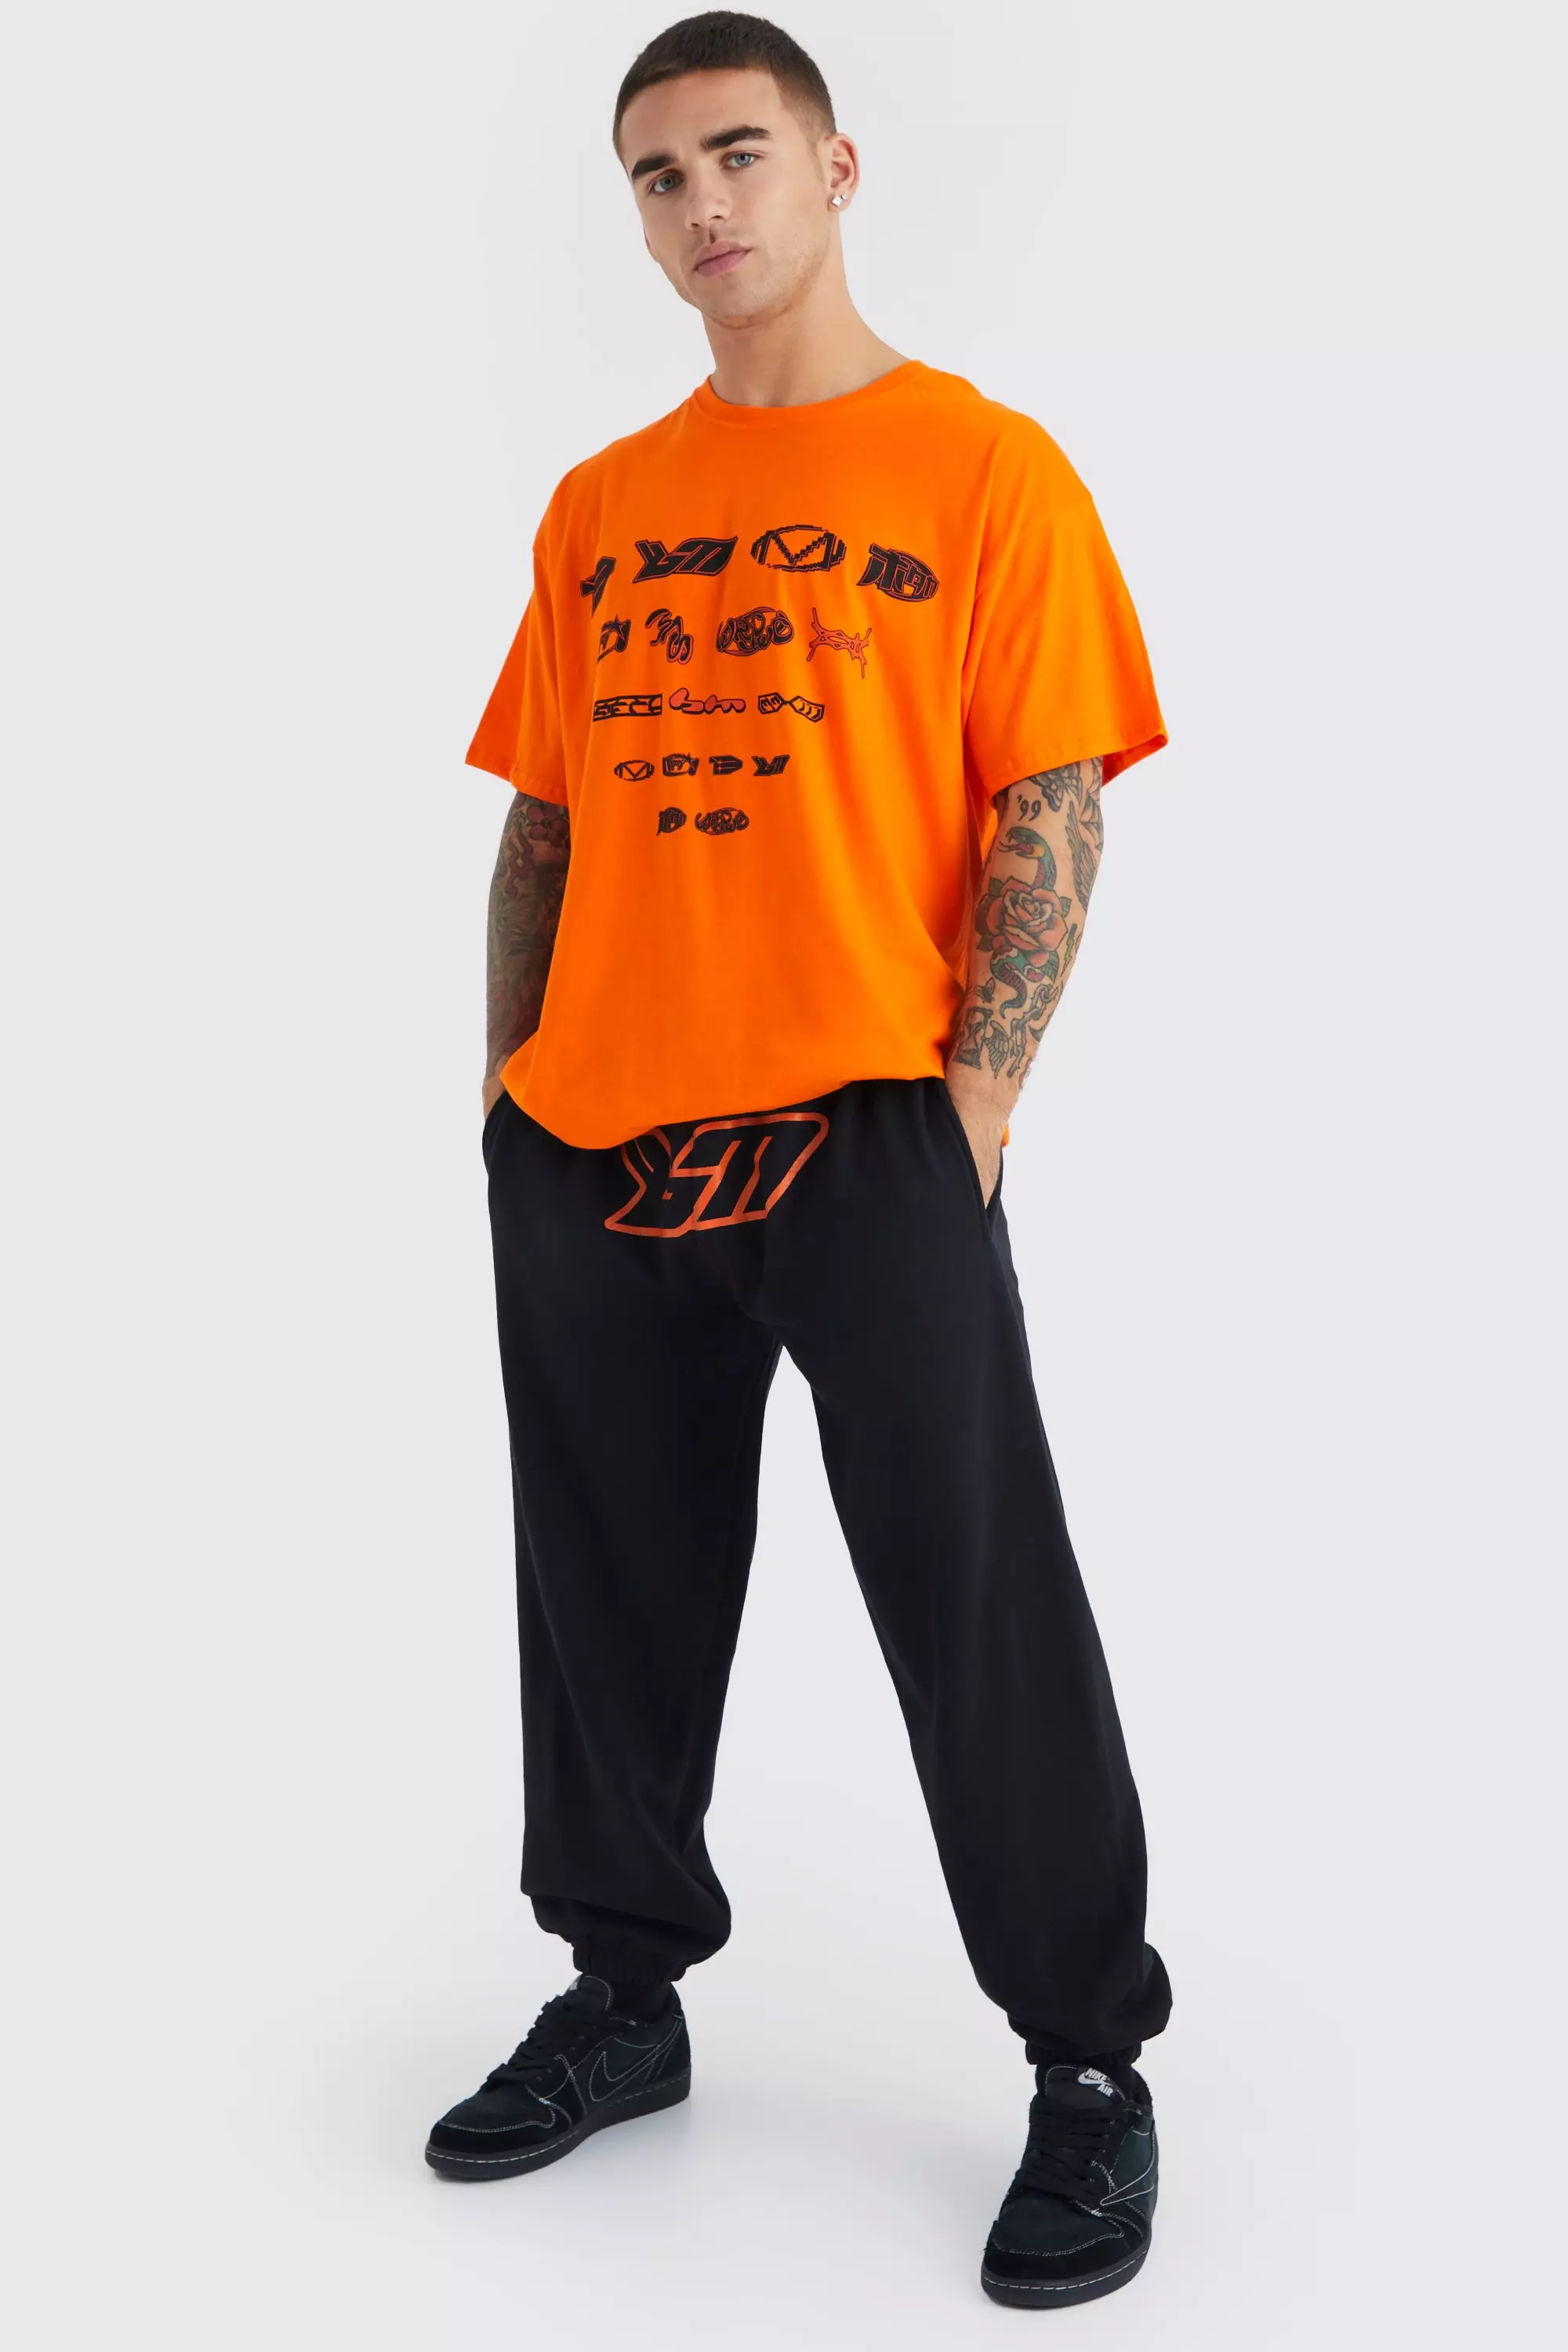 Oversized Bm Crotch Print T-shirt & Sweatpants Set Orange